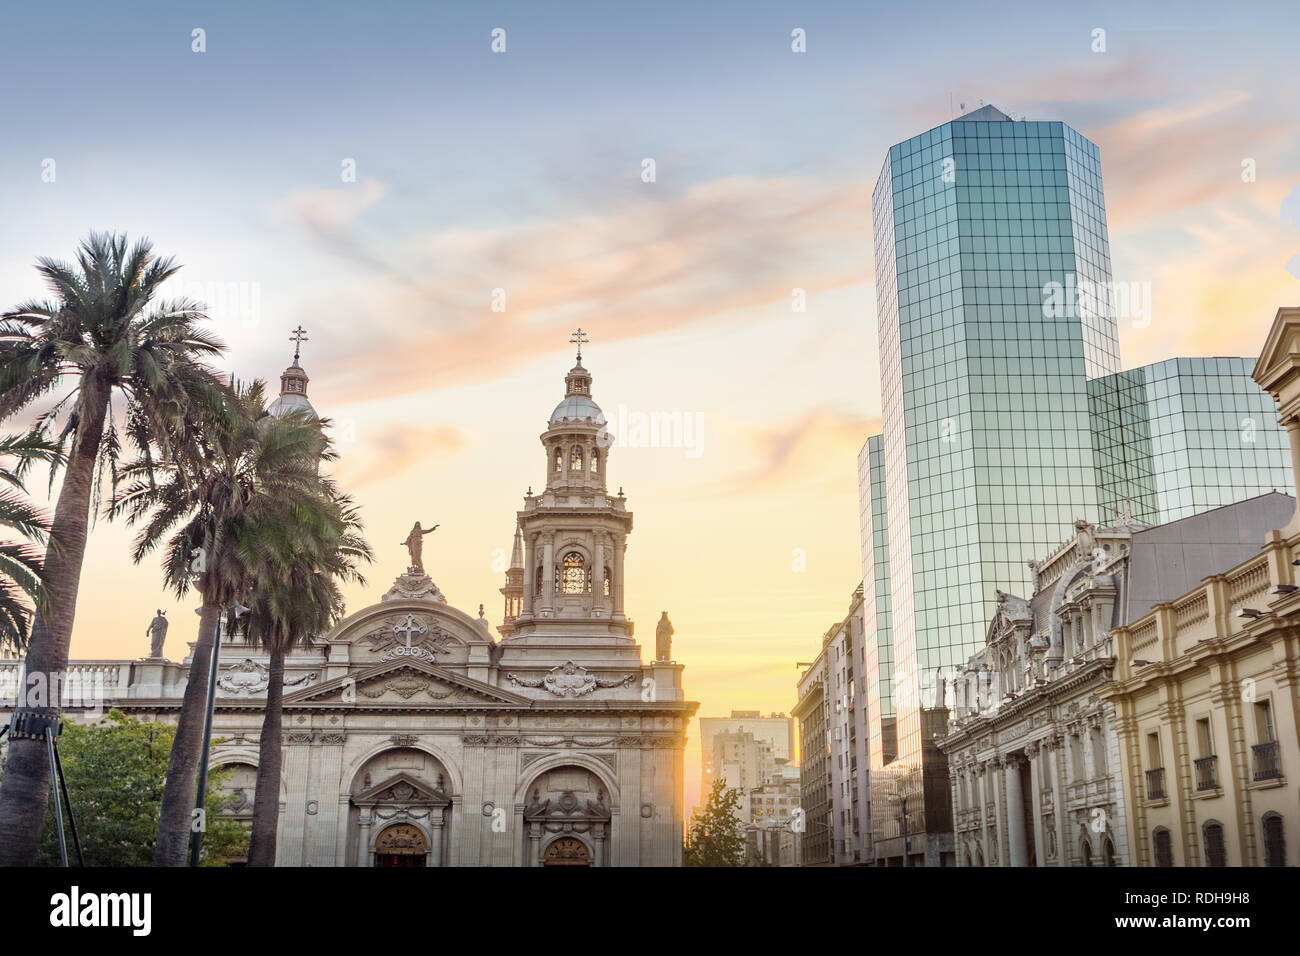 Plaza de Armas Square and Santiago Metropolitan Cathedral at sunset - Santiago, Chile Stock Photo